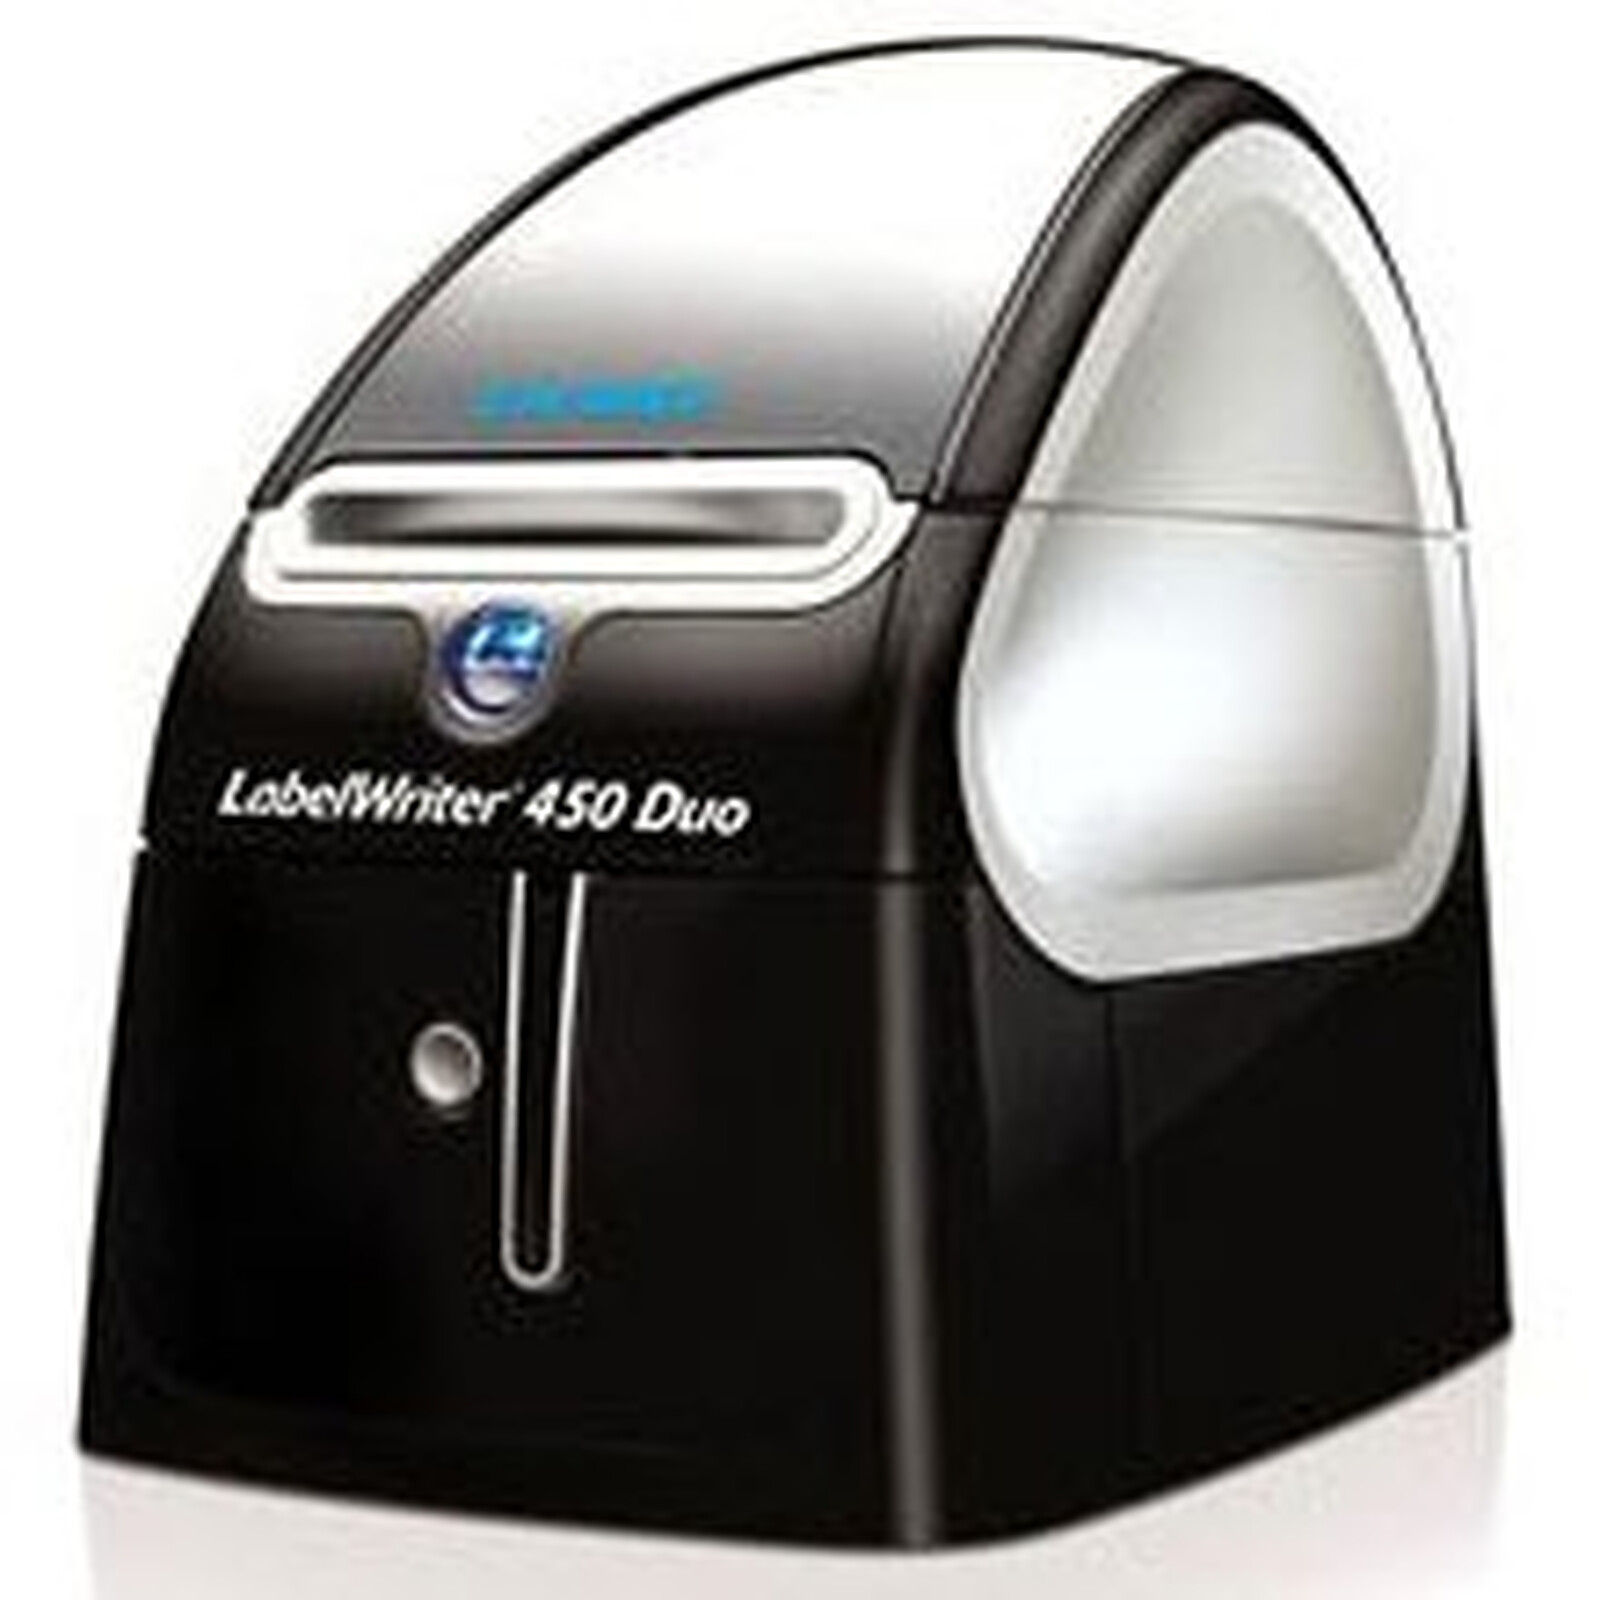 DYMO LabelWriter 450 Duo - Imprimante thermique - Garantie 3 ans LDLC